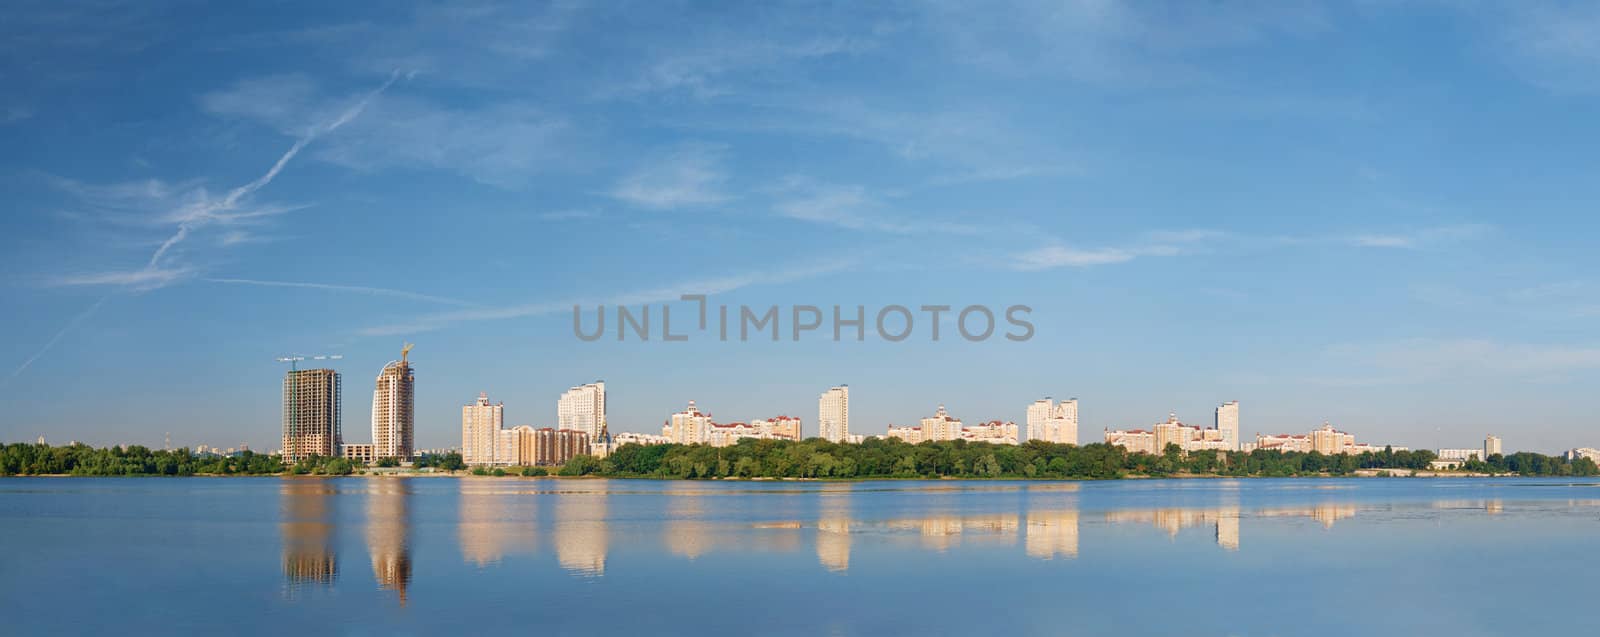 Panorama of city on river by Keetten_Predators